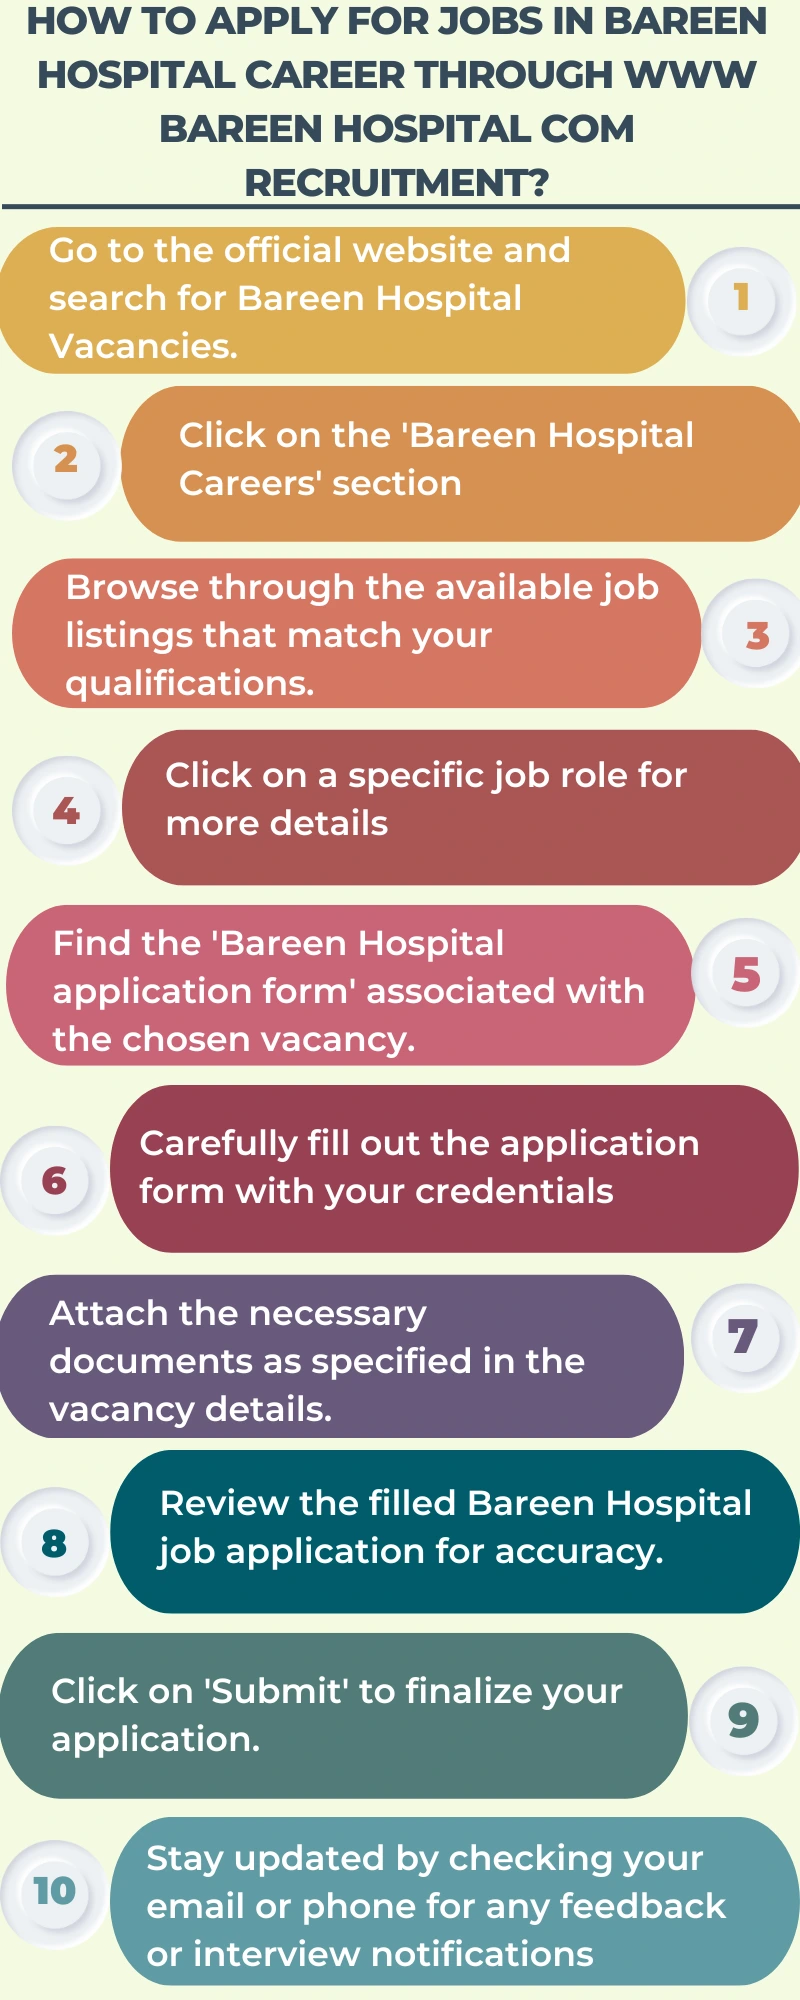 How to Apply for Jobs in Bareen Hospital Career through www Bareen Hospital com recruitment_